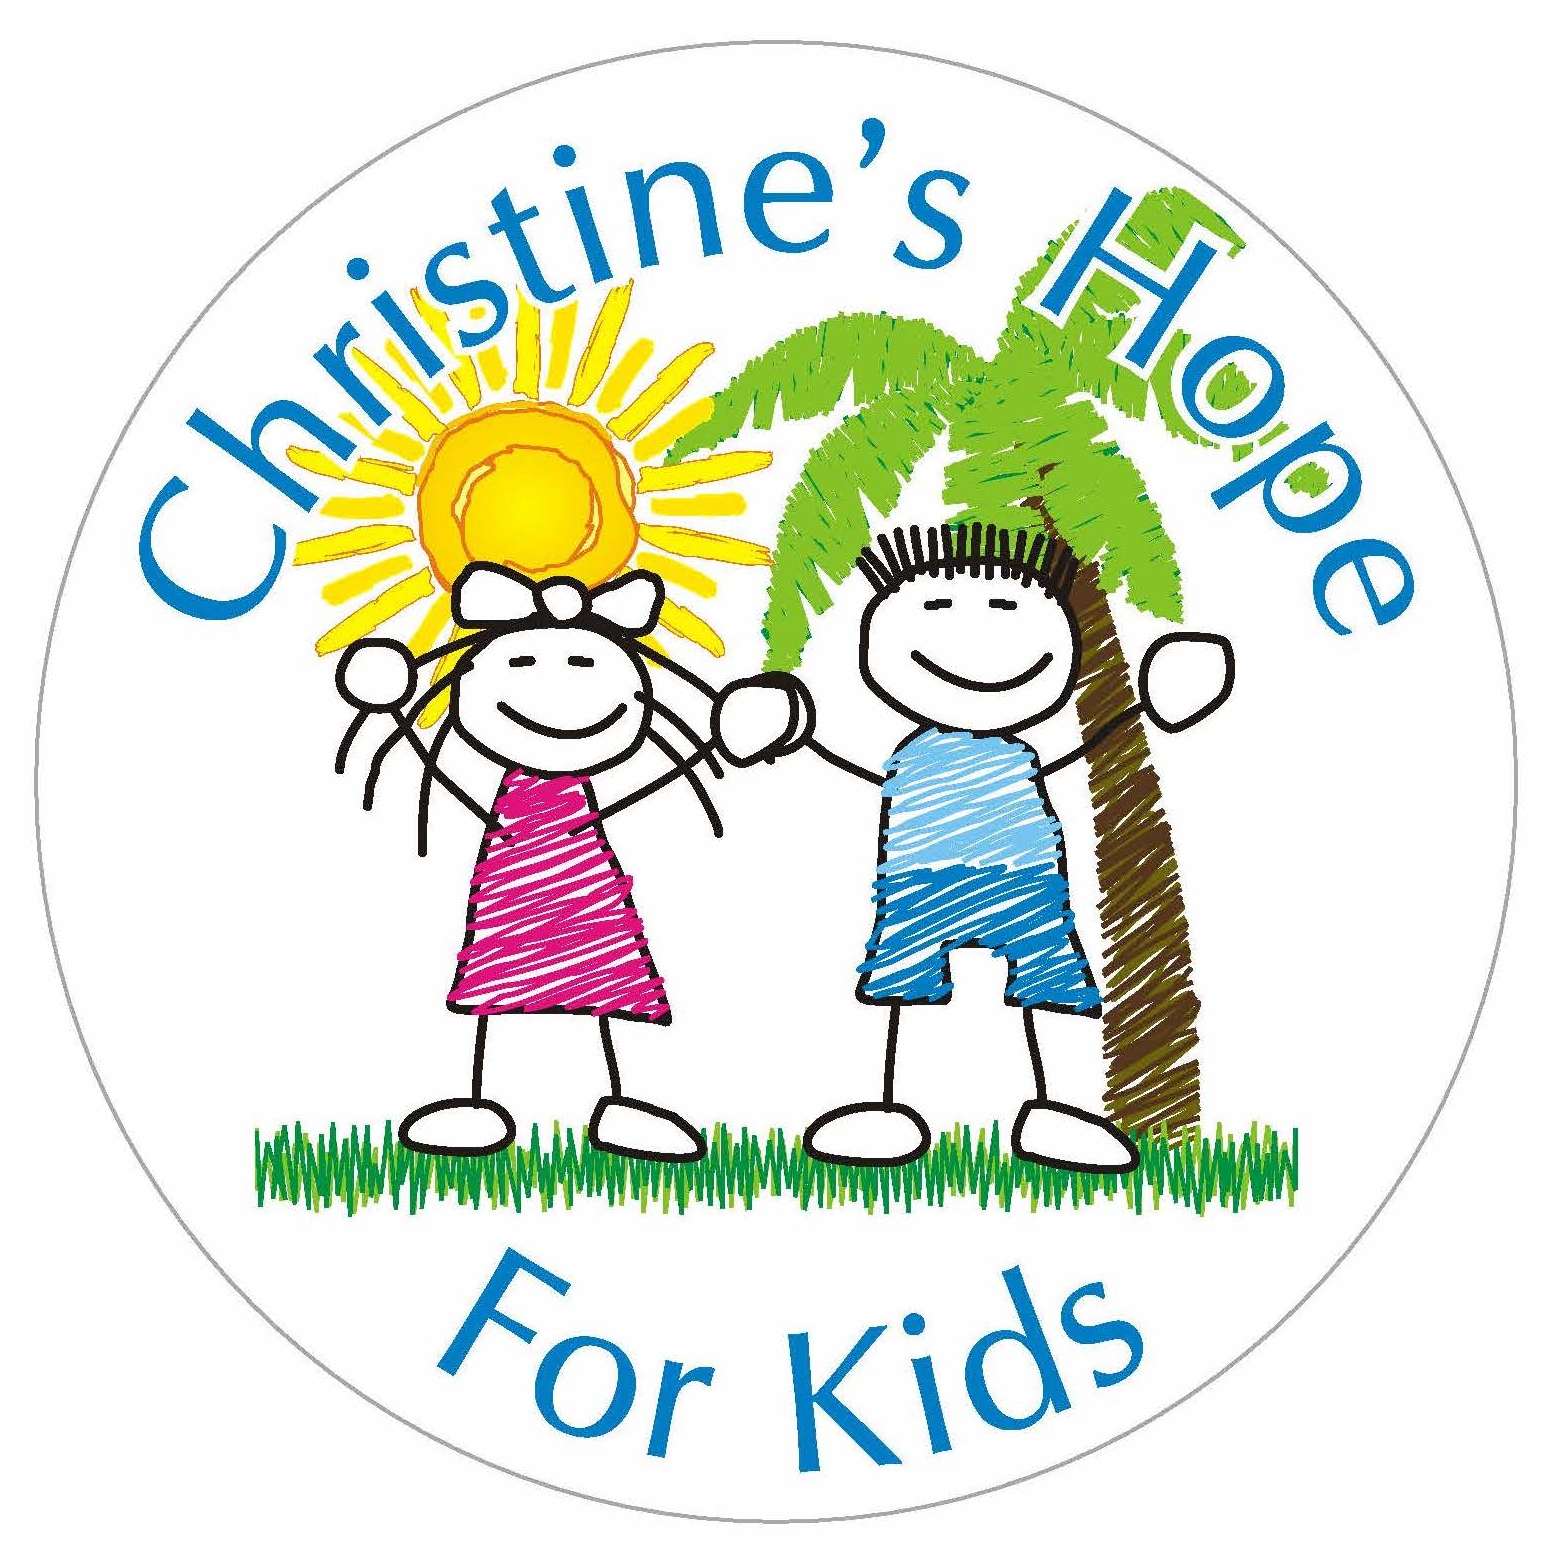 christine's hope for kids